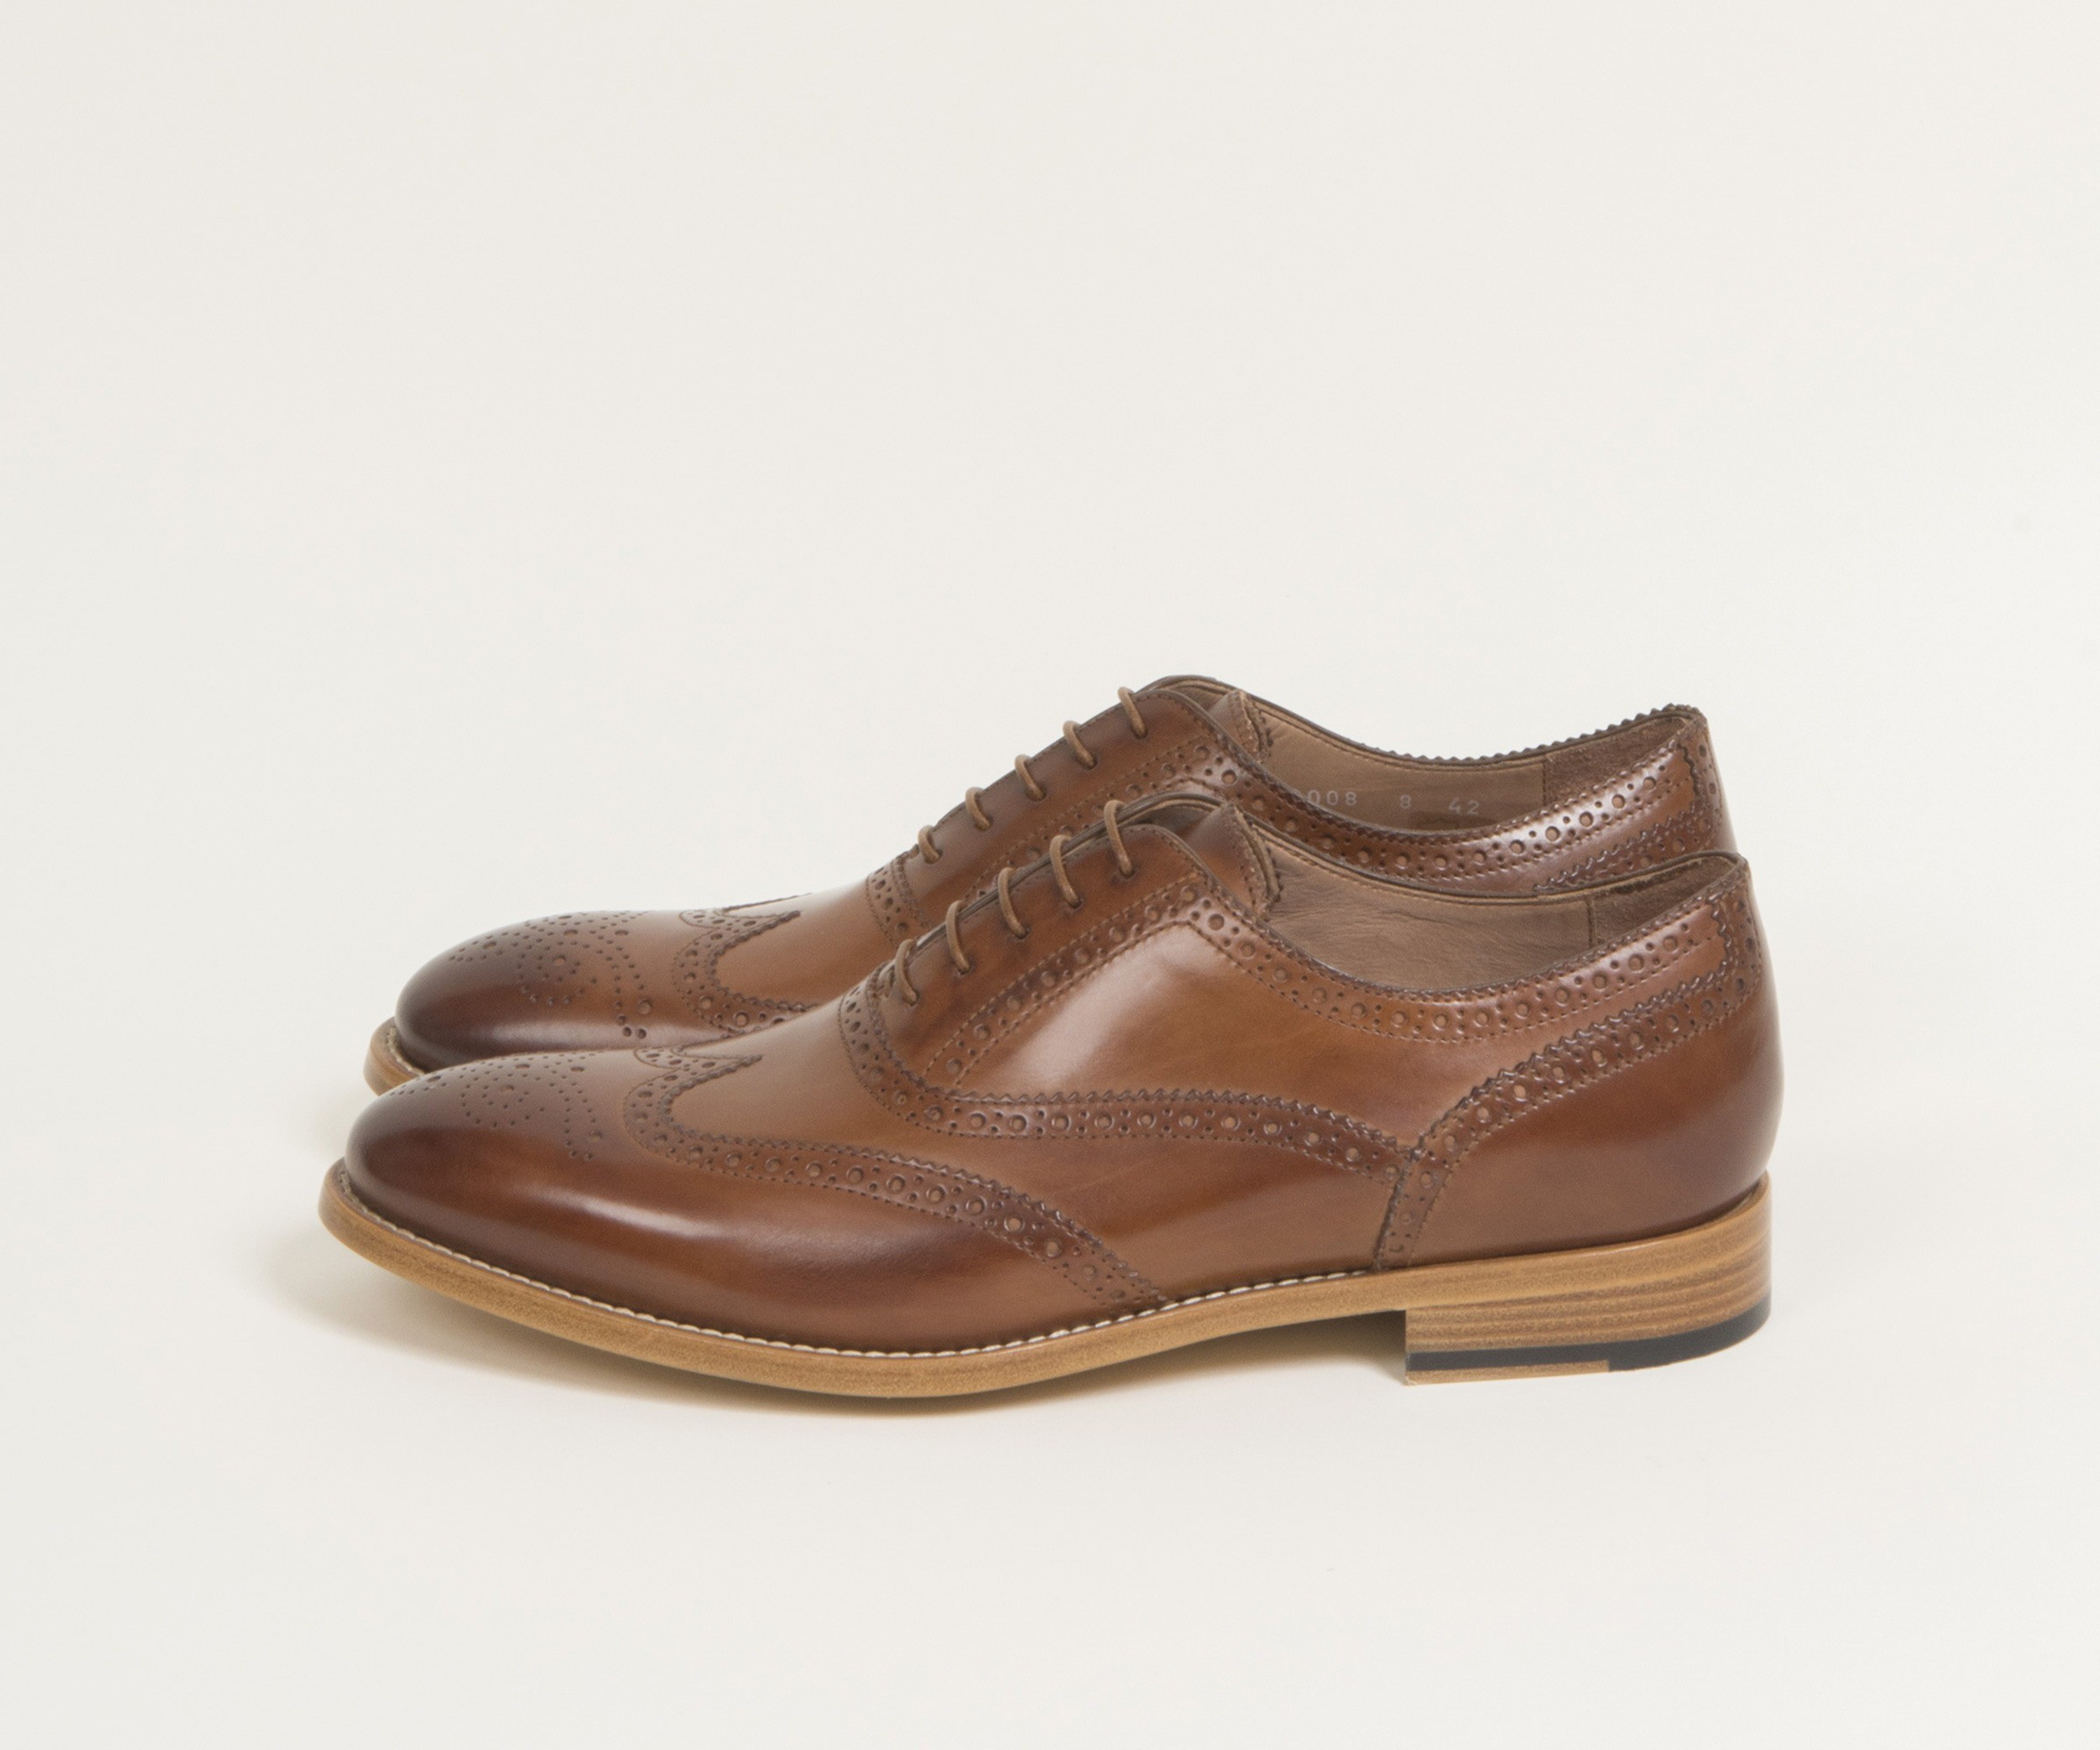 Paul Smith Shoes 'Christo' Brogue Shoe Tan